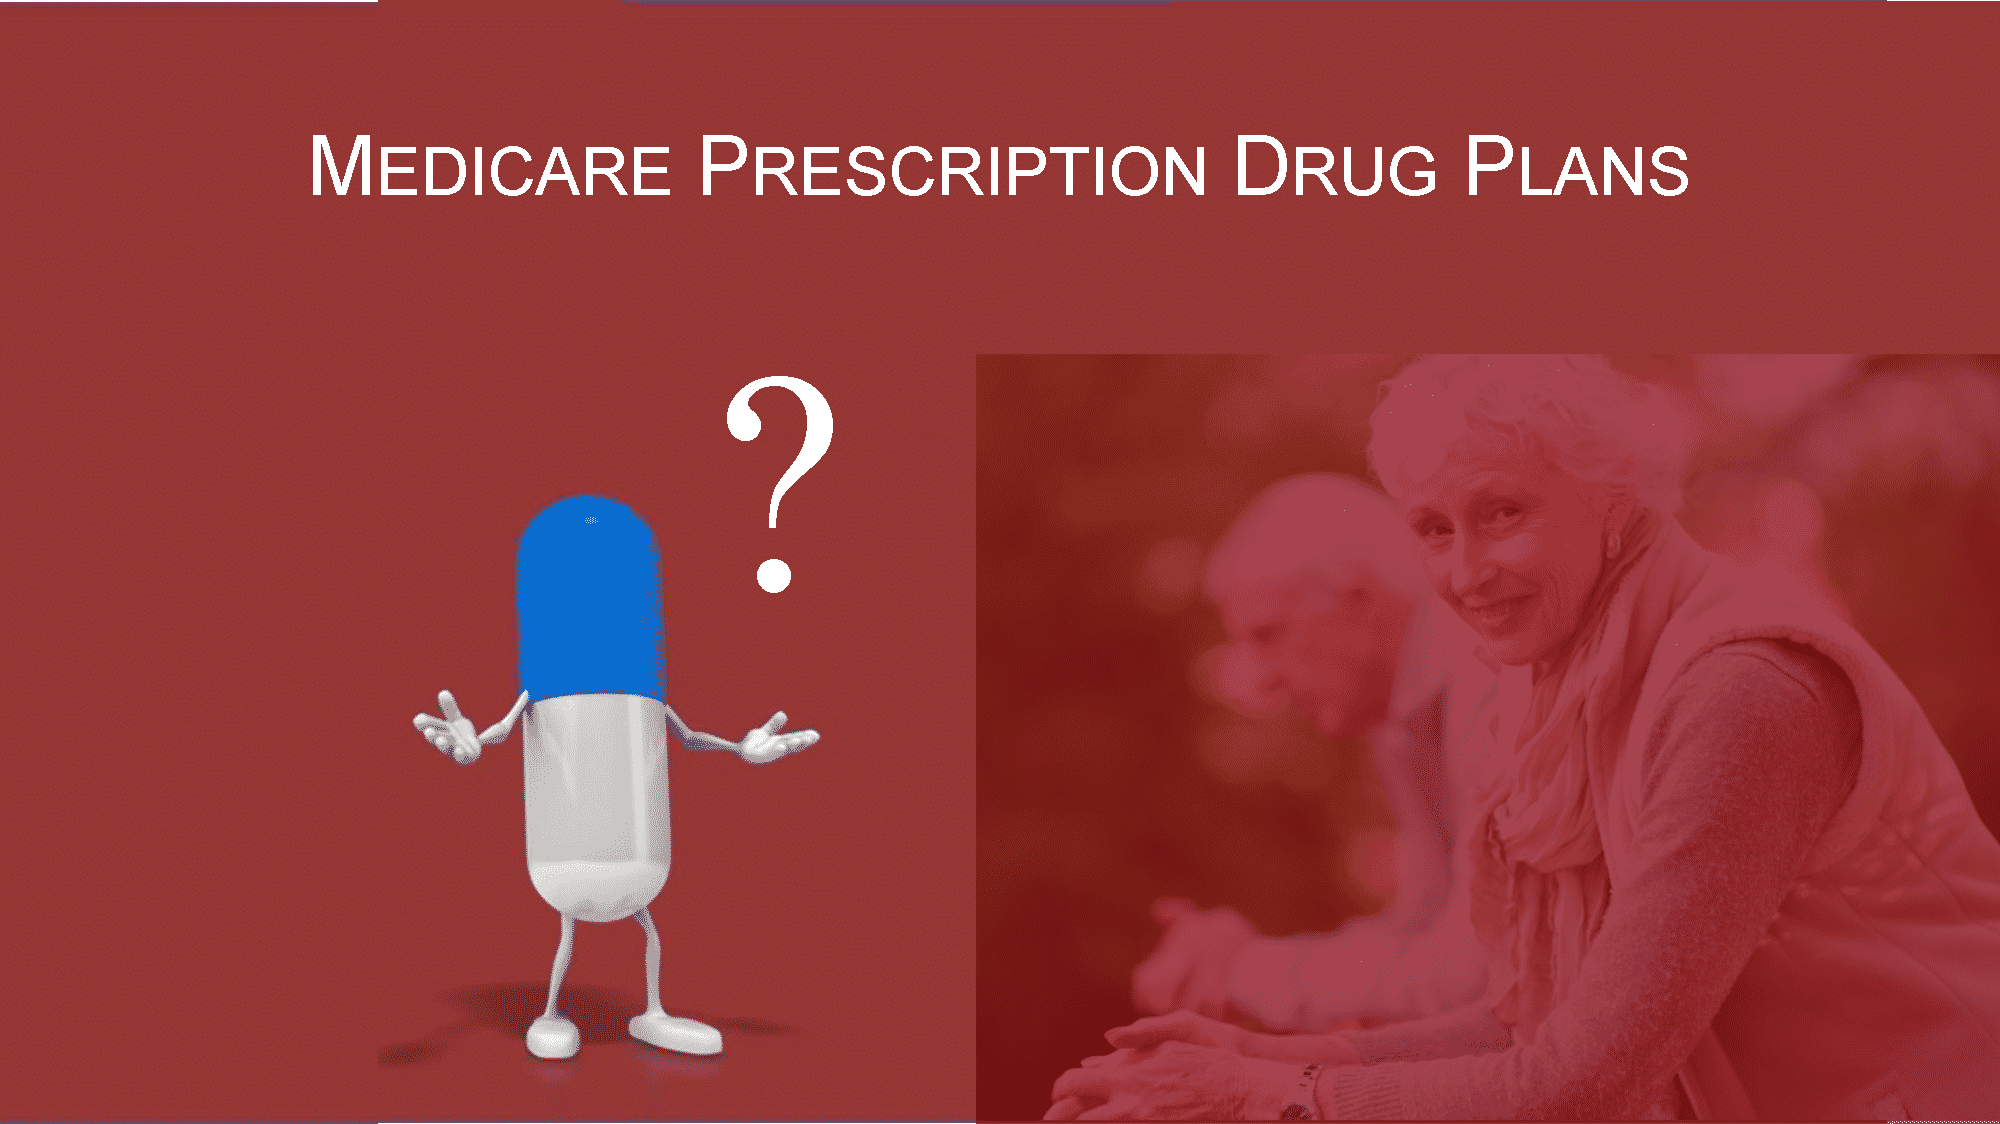 Do I Have to Enroll in a Medicare Prescription Drug Plan Even If I Don’t Take Any Medicine?